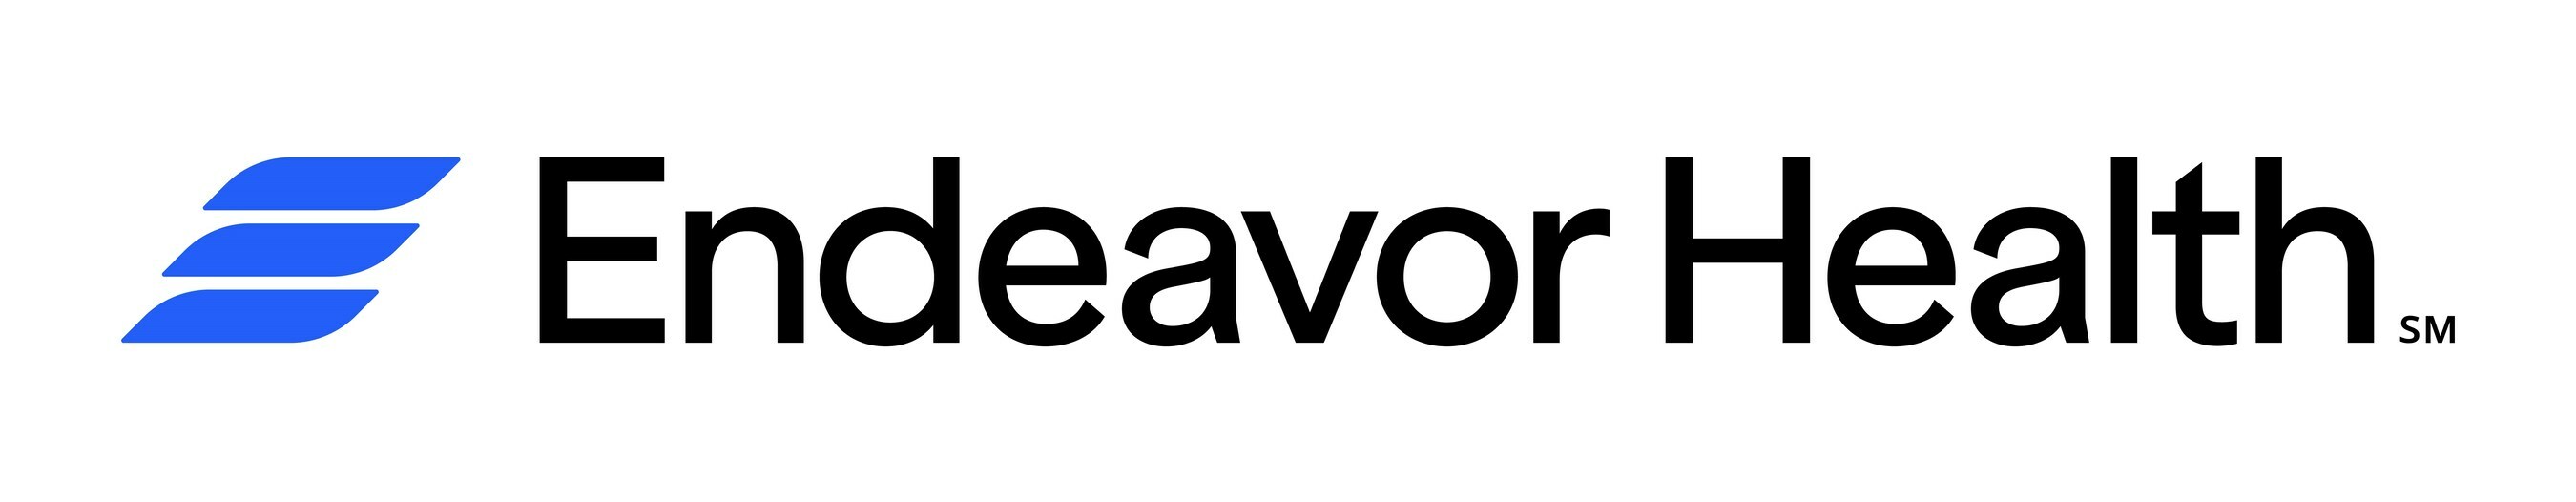 Endeavor Health logo (PRNewsfoto/Endeavor Health)